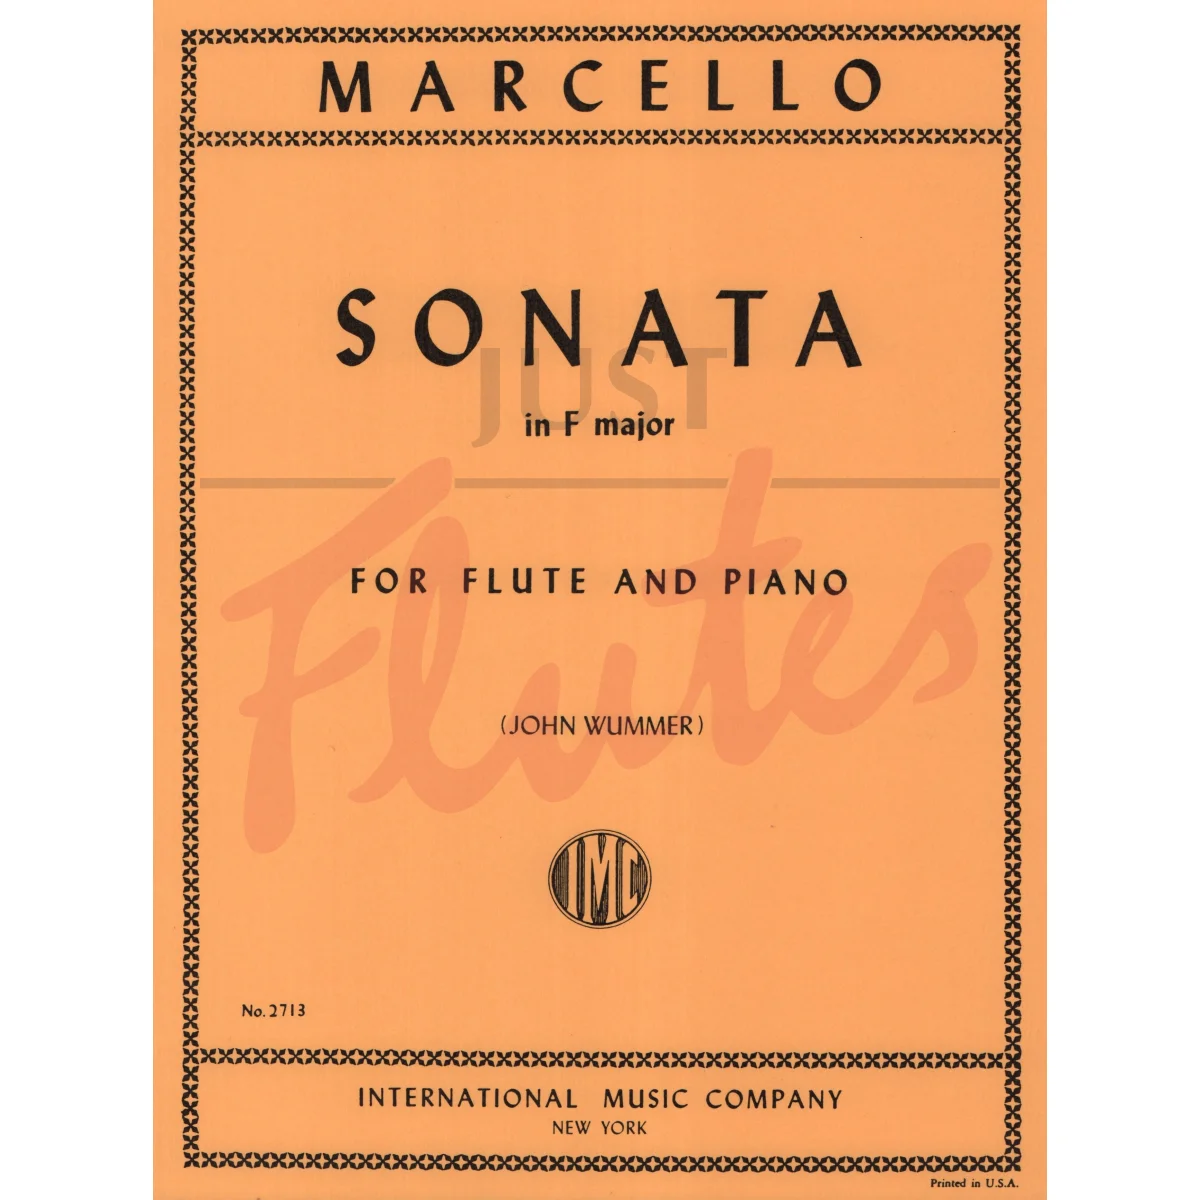 Sonata in F major for Flute and Piano